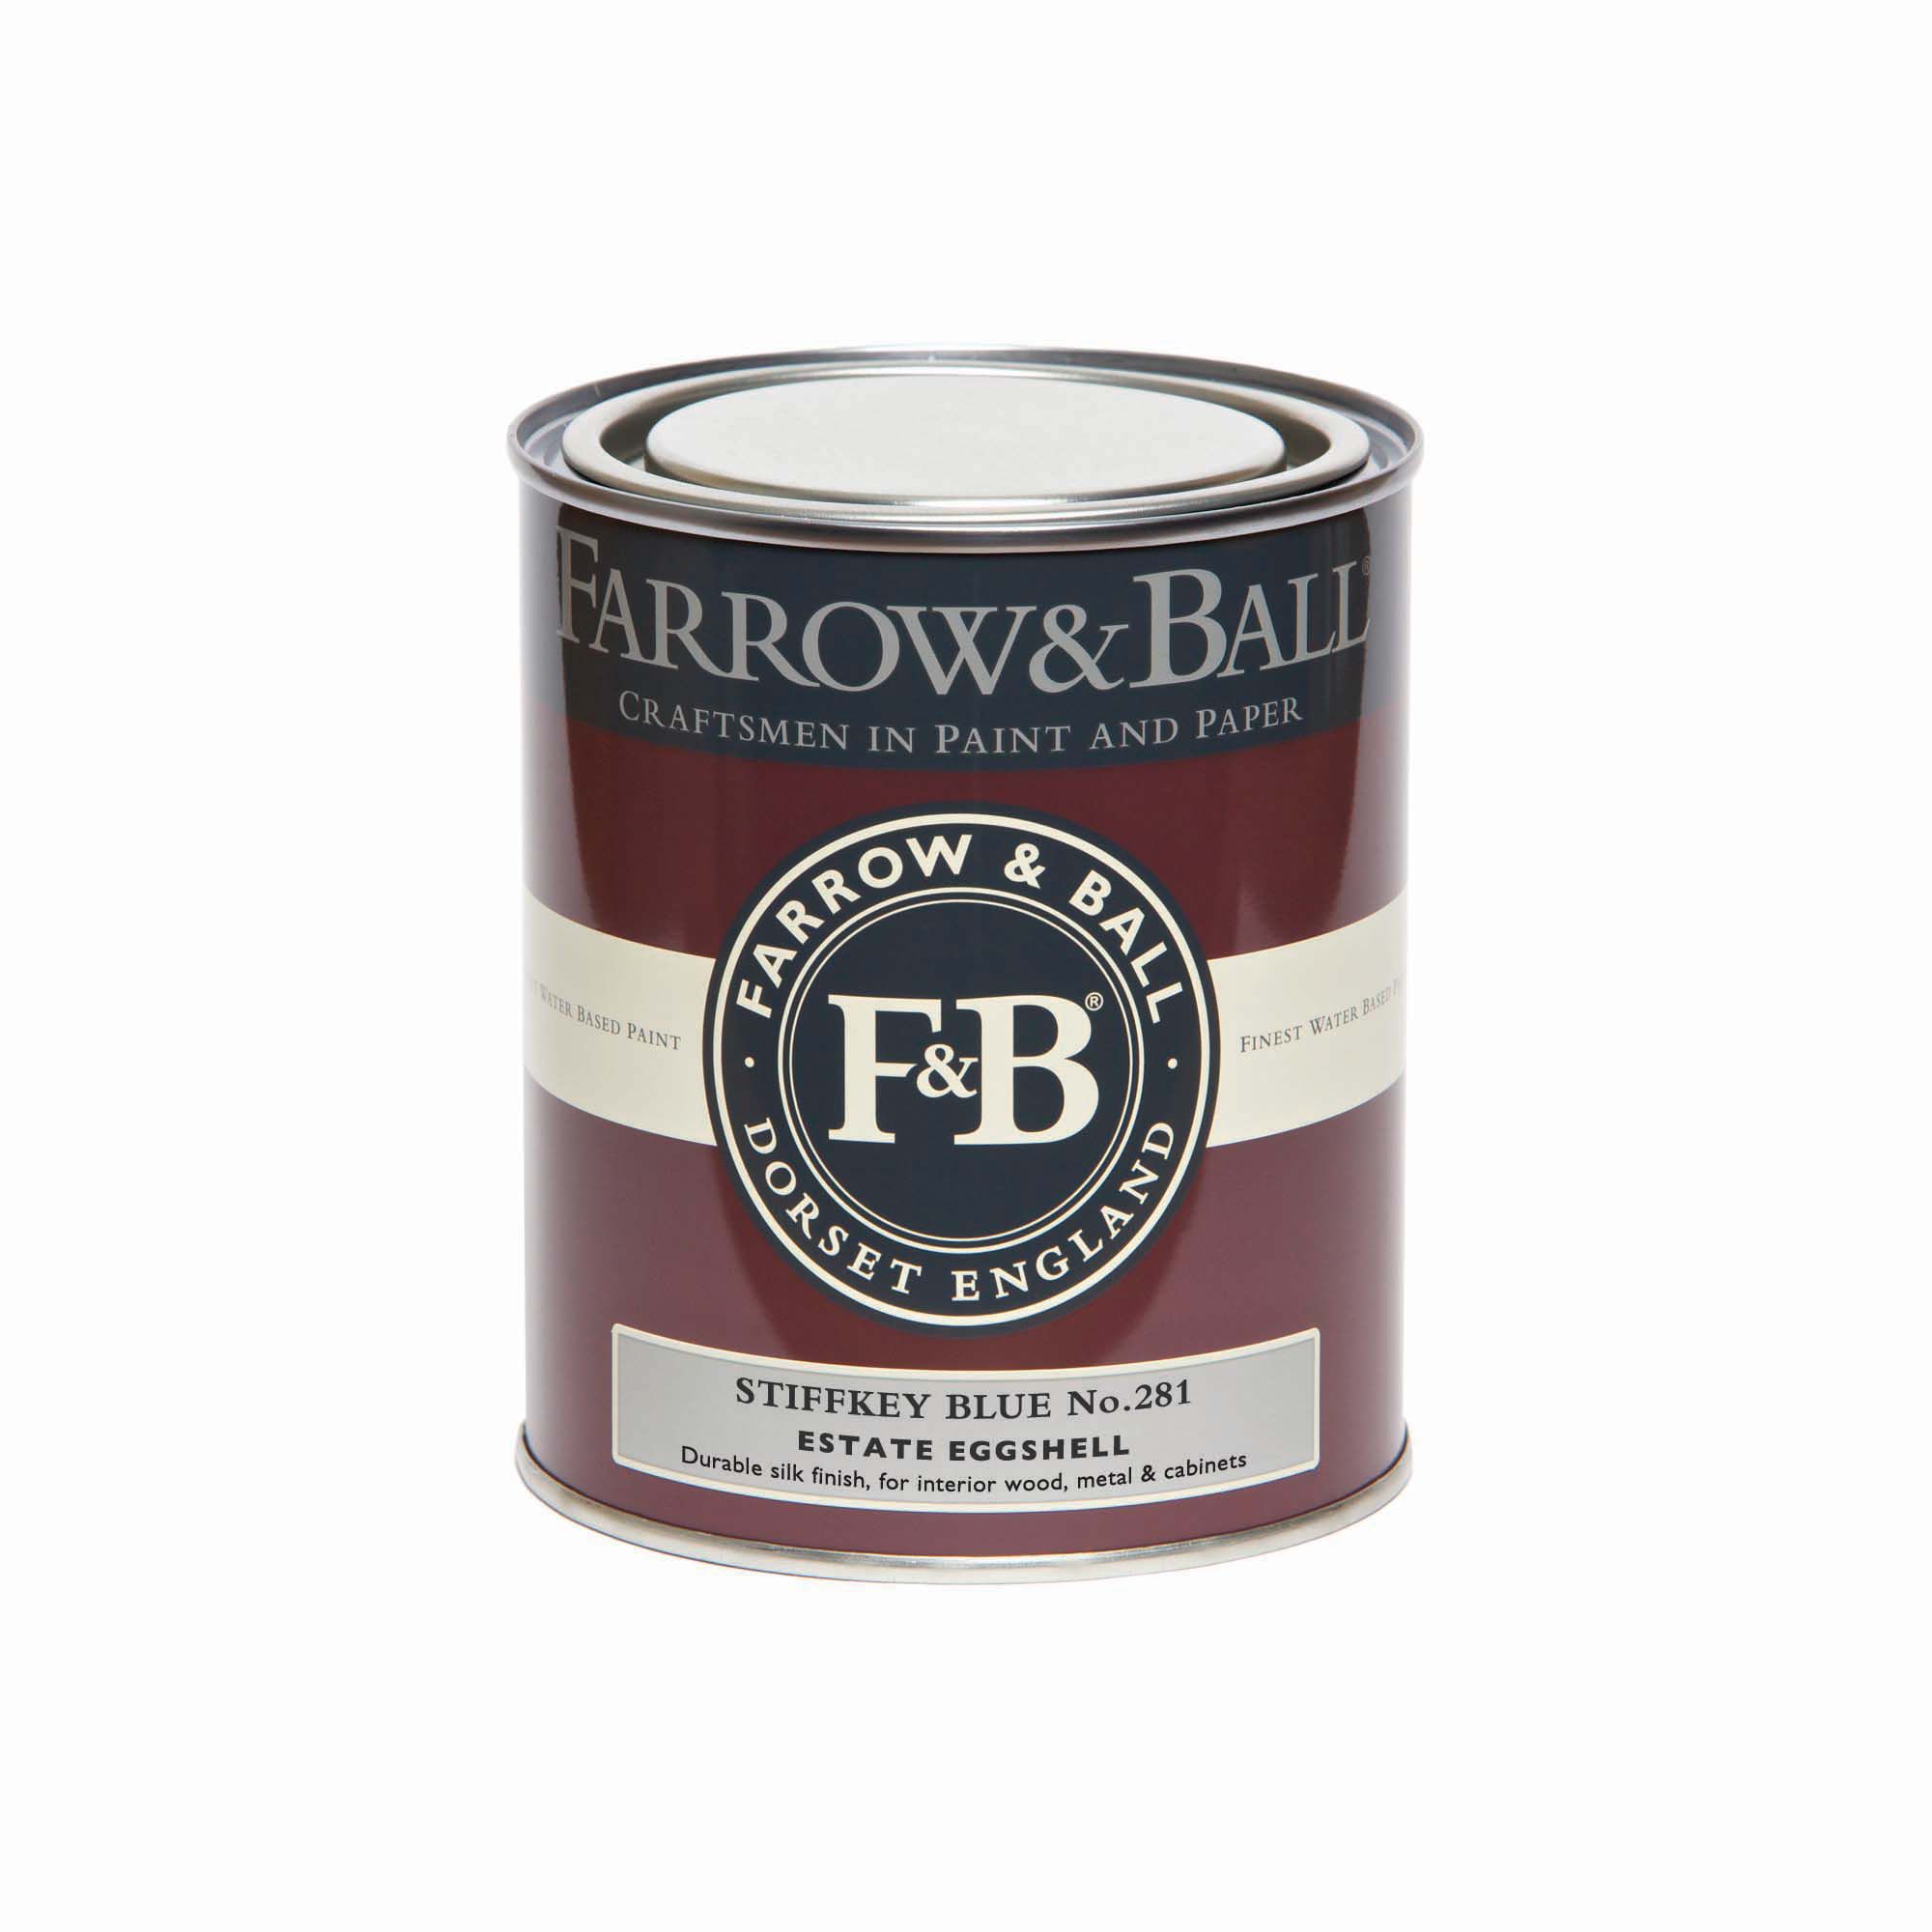 Farrow & Ball Estate Stiffkey Blue No.281 Eggshell Paint, 750ml